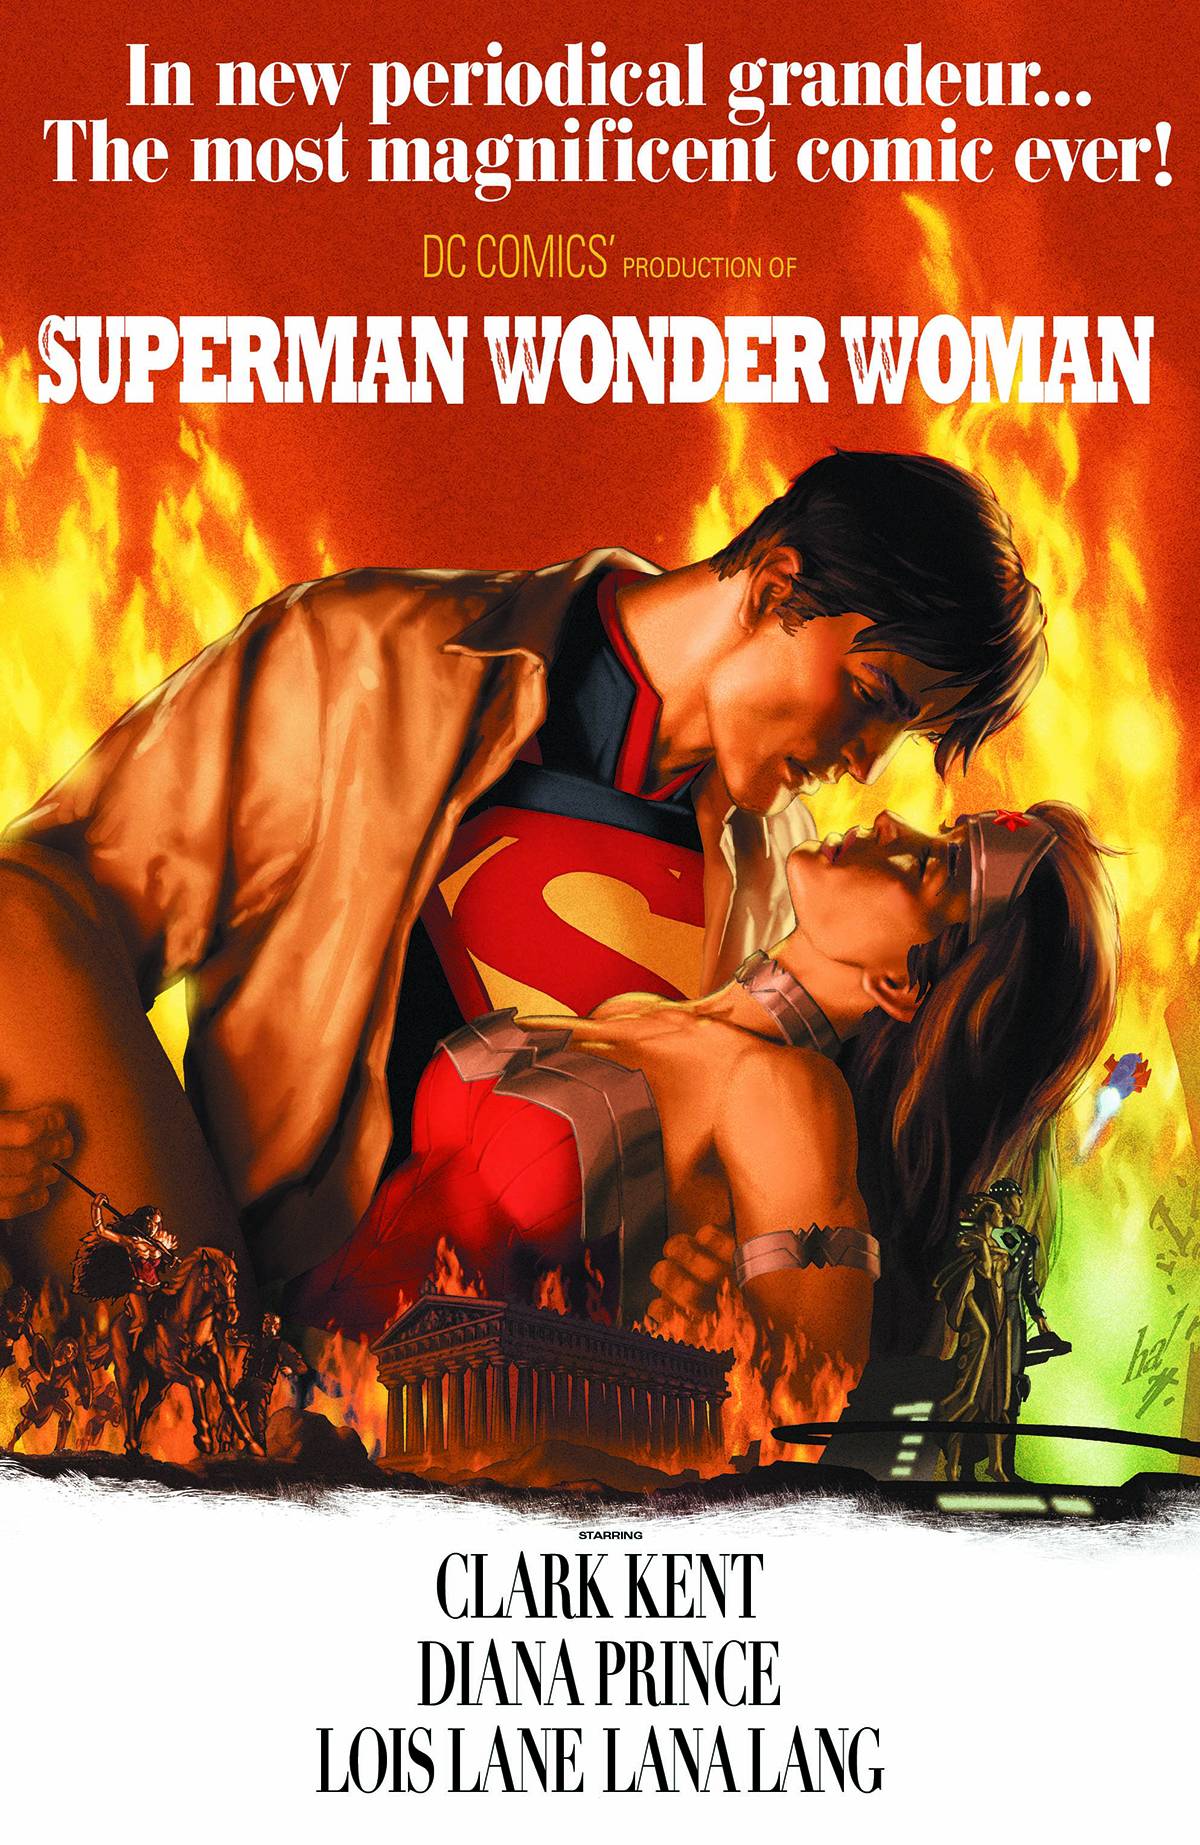 Superman Wonder Woman #17 Movie Poster Variant Edition (2013)